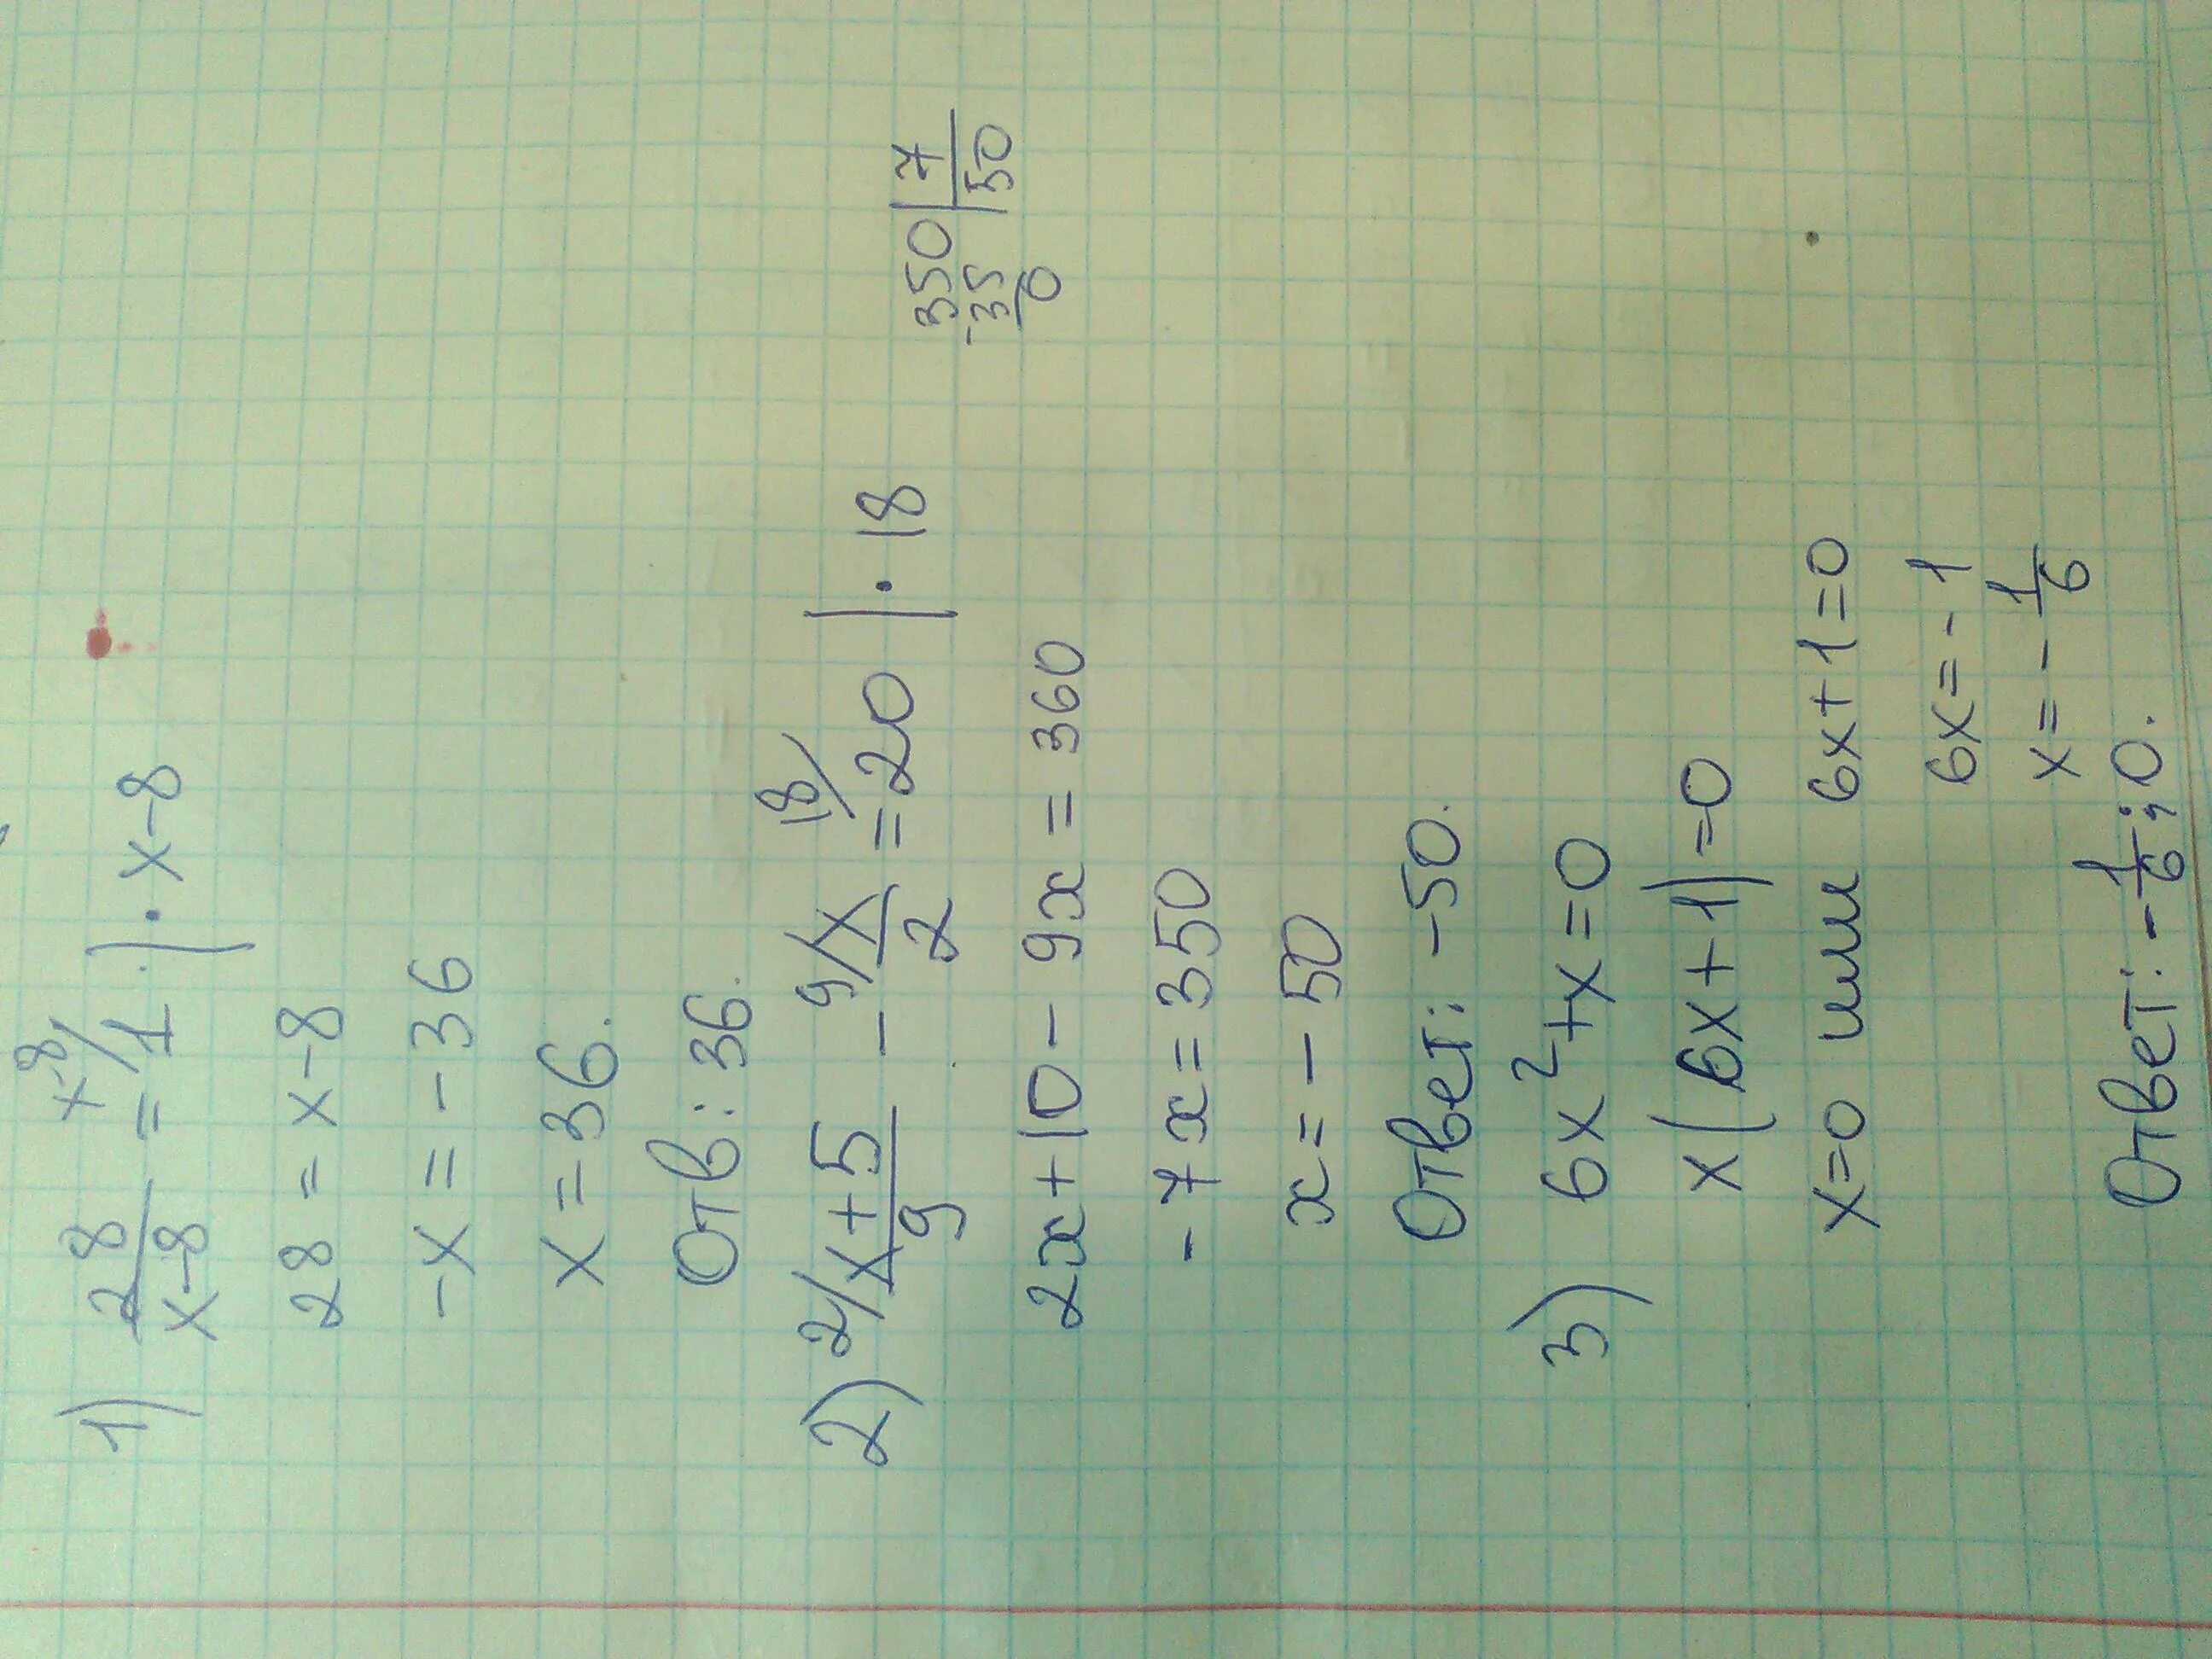 X2-9x+20 0. (X2-5x+2)(x2-5x-1)=28. 2x-3>3x+1. X2<9.